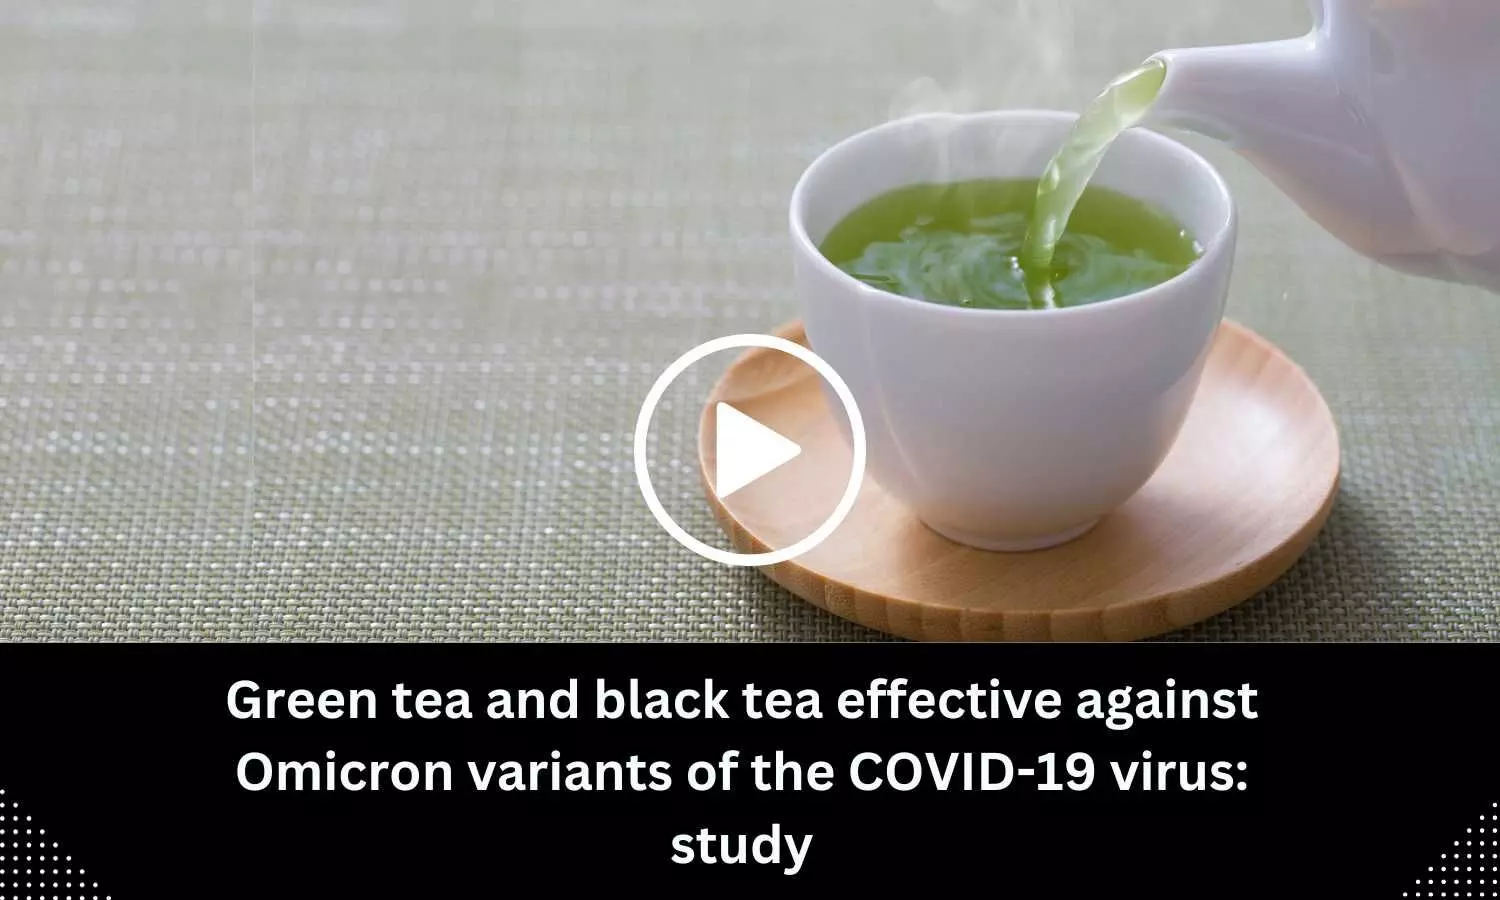 Green tea and black tea effective against Omicron variants of the COVID-19 virus: Study